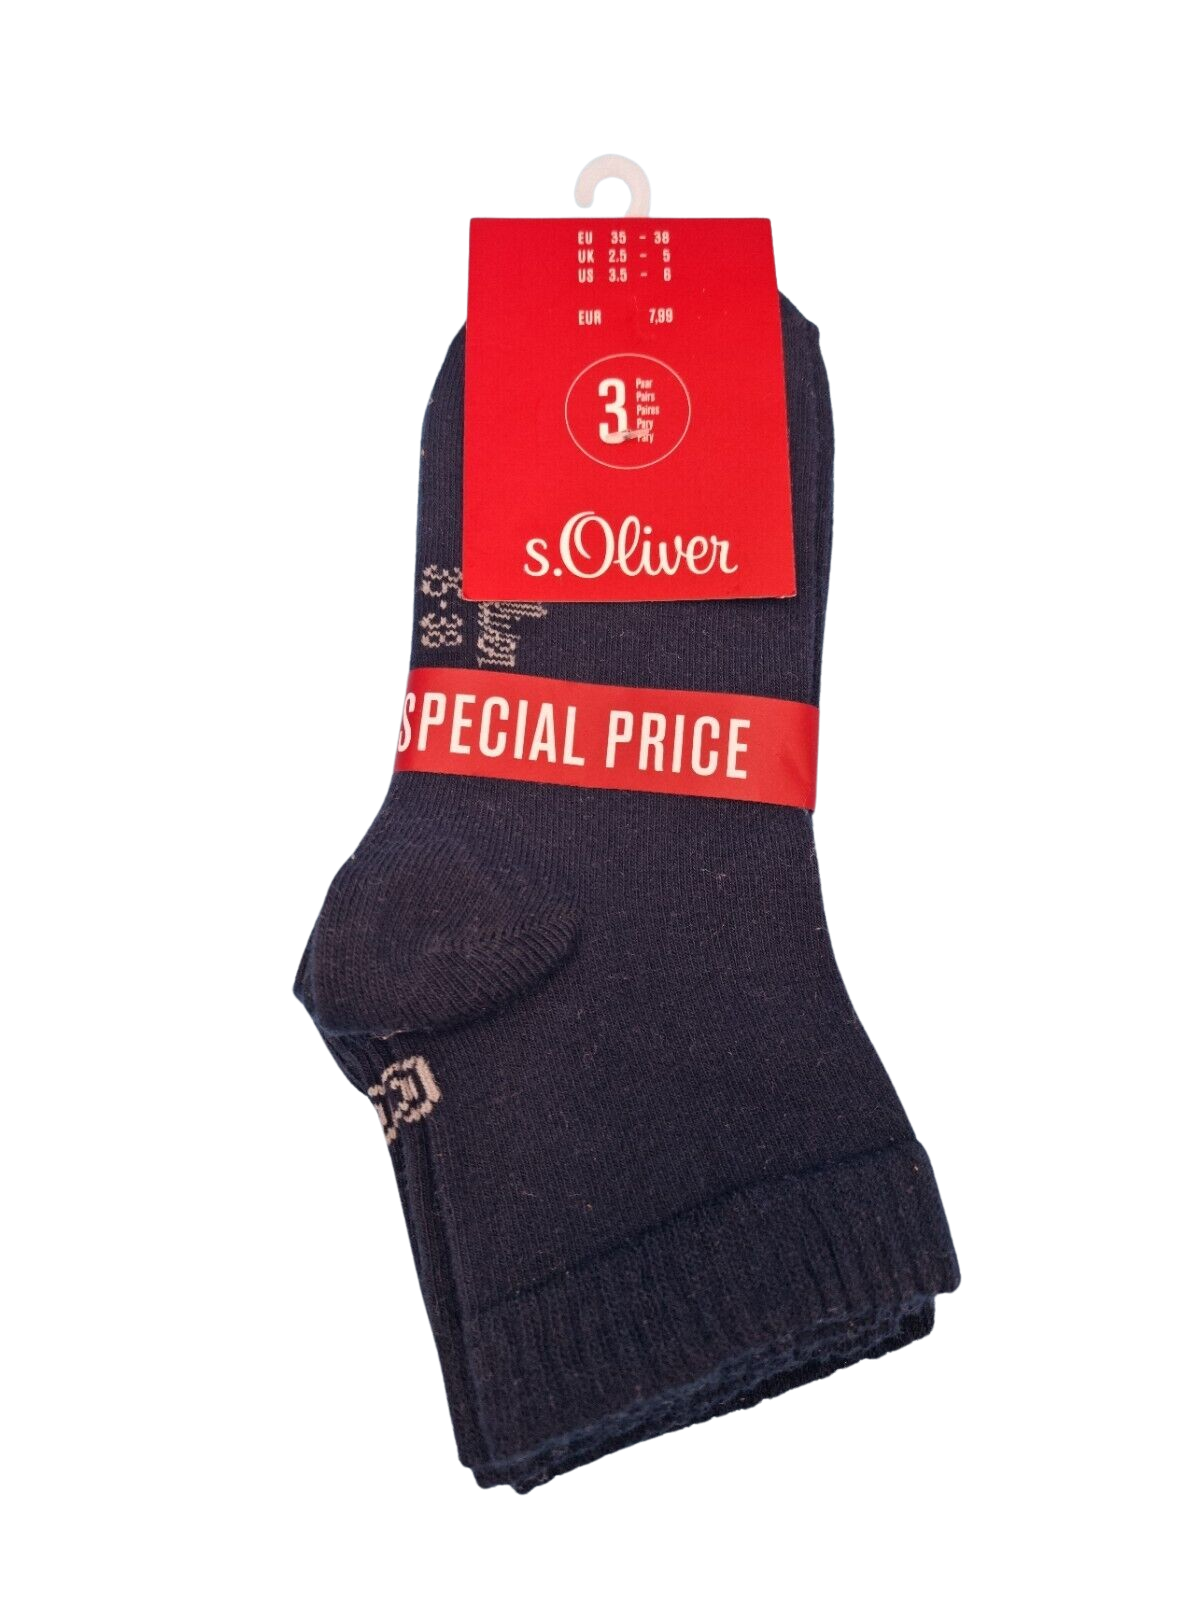 Größe 35-38 Oliver Socken 3 s. – Paar (1,67€/Paar)